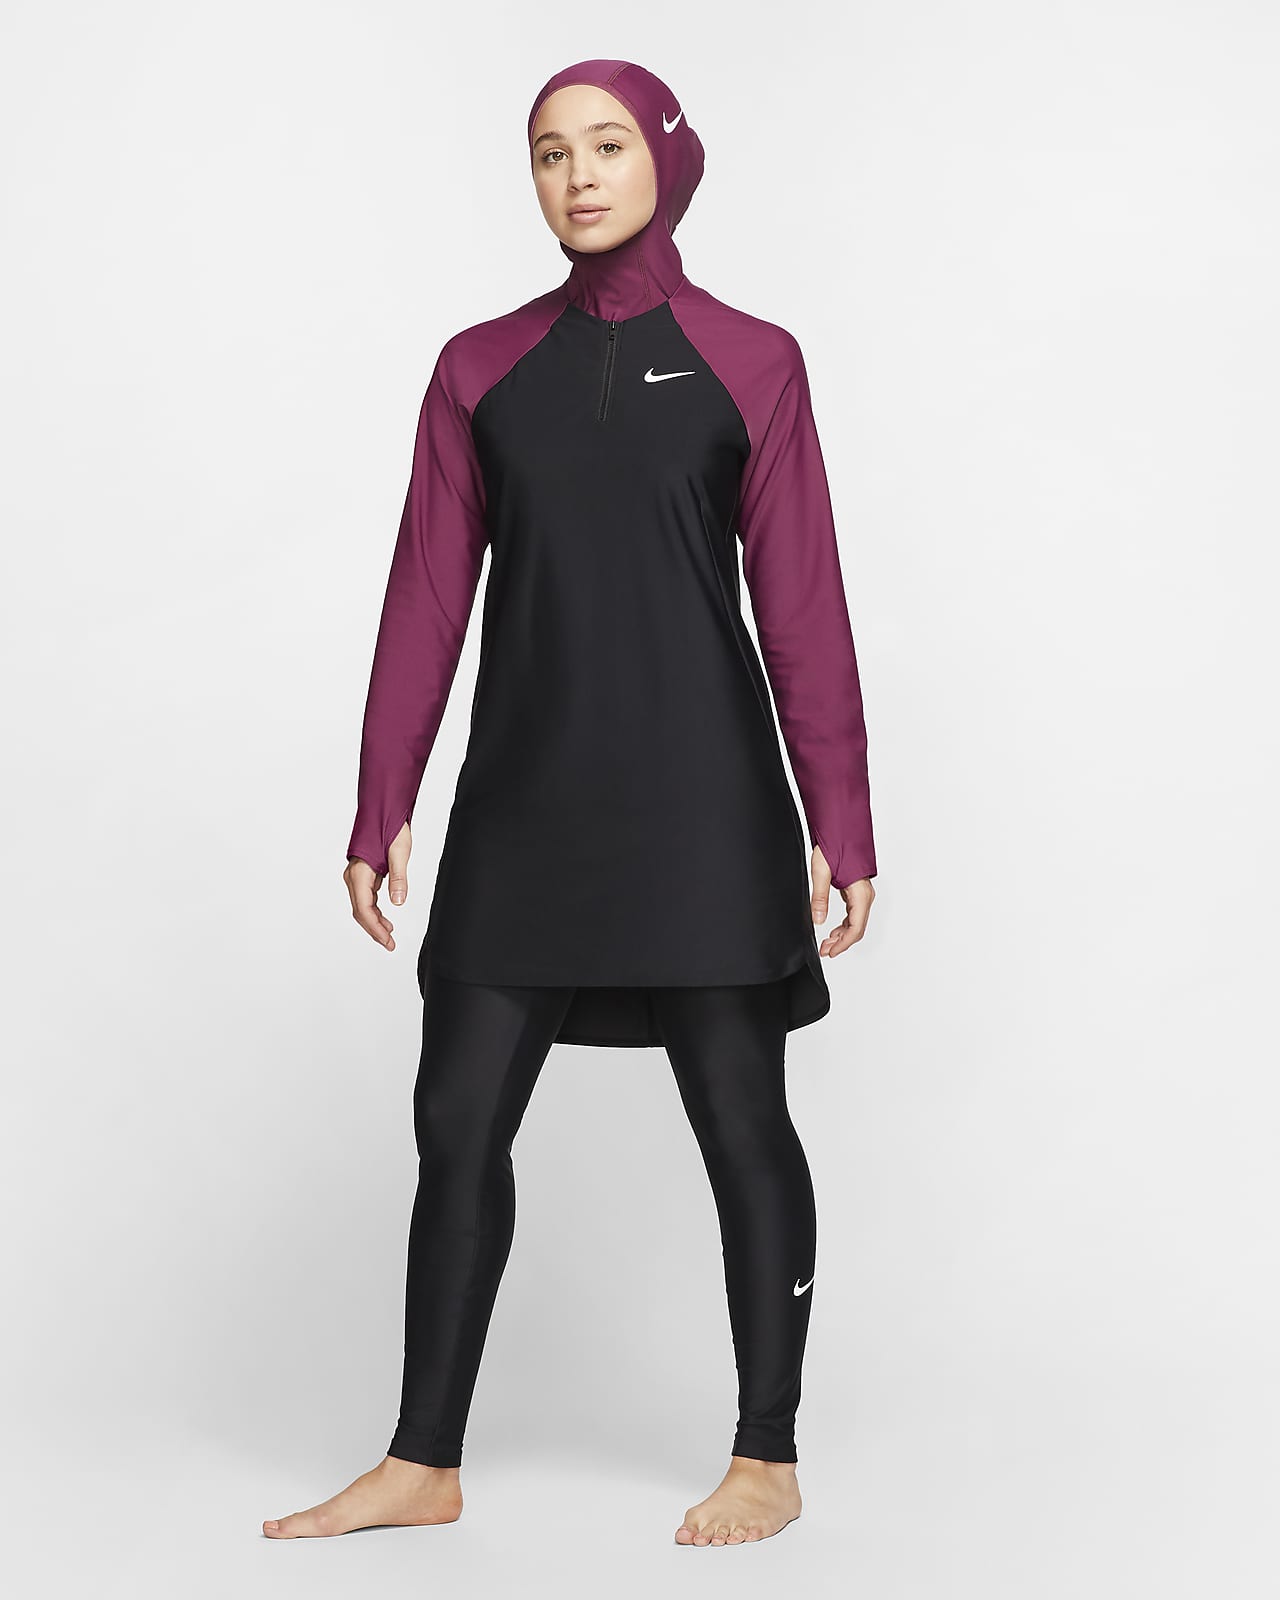 Nike Victory Dar Kesimli Tam Koruma Sunan Kadın Mayo Tayt